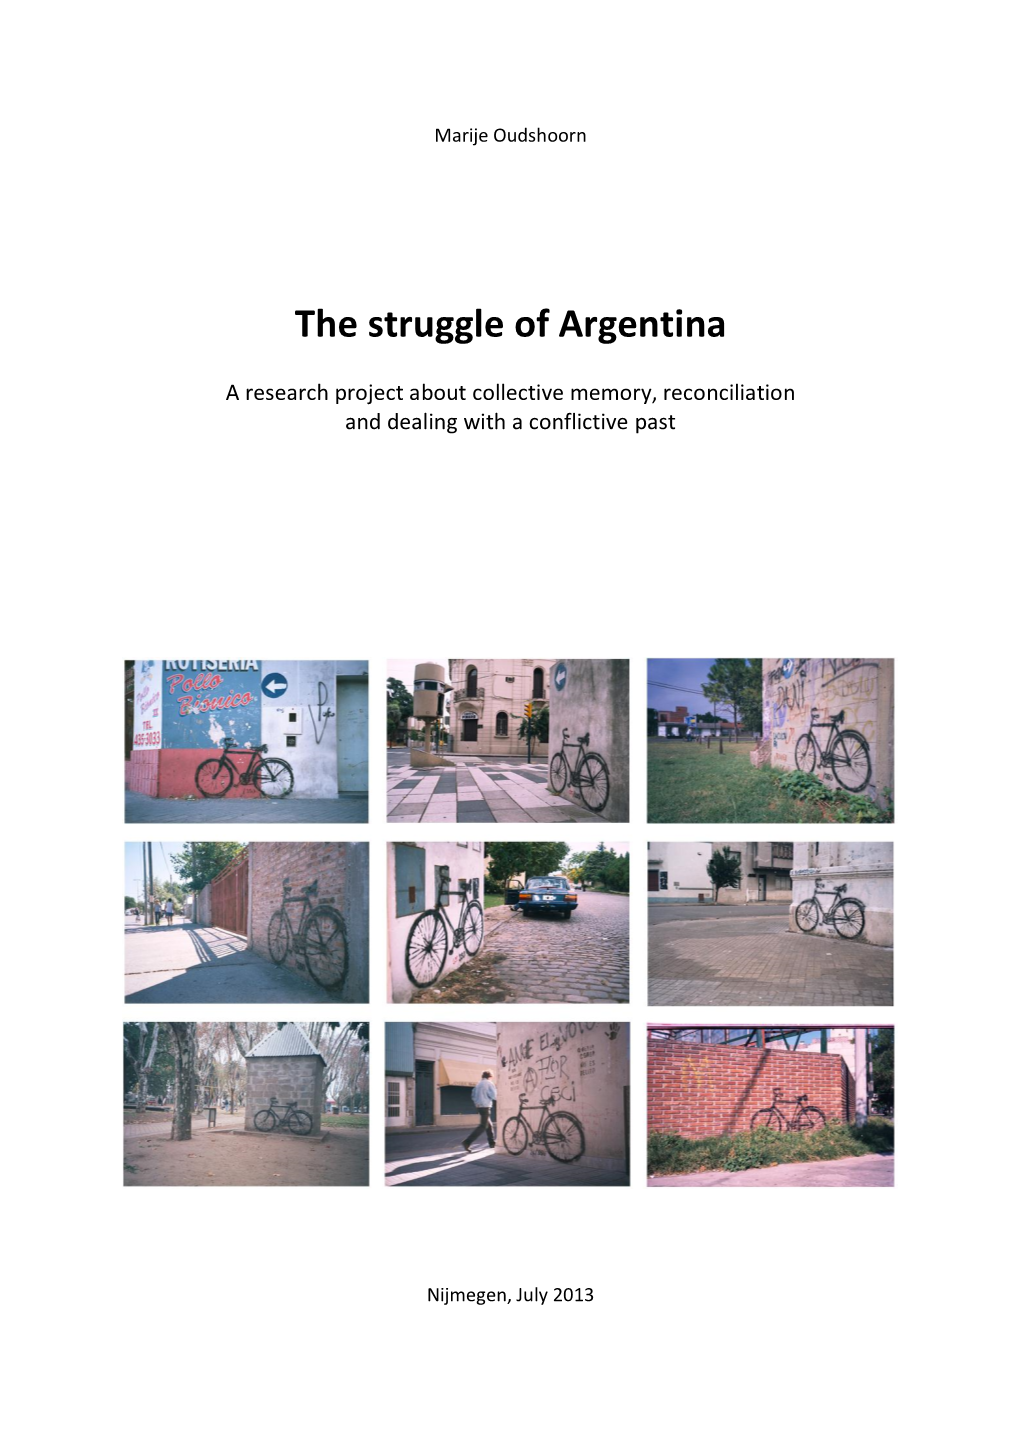 The Struggle of Argentina